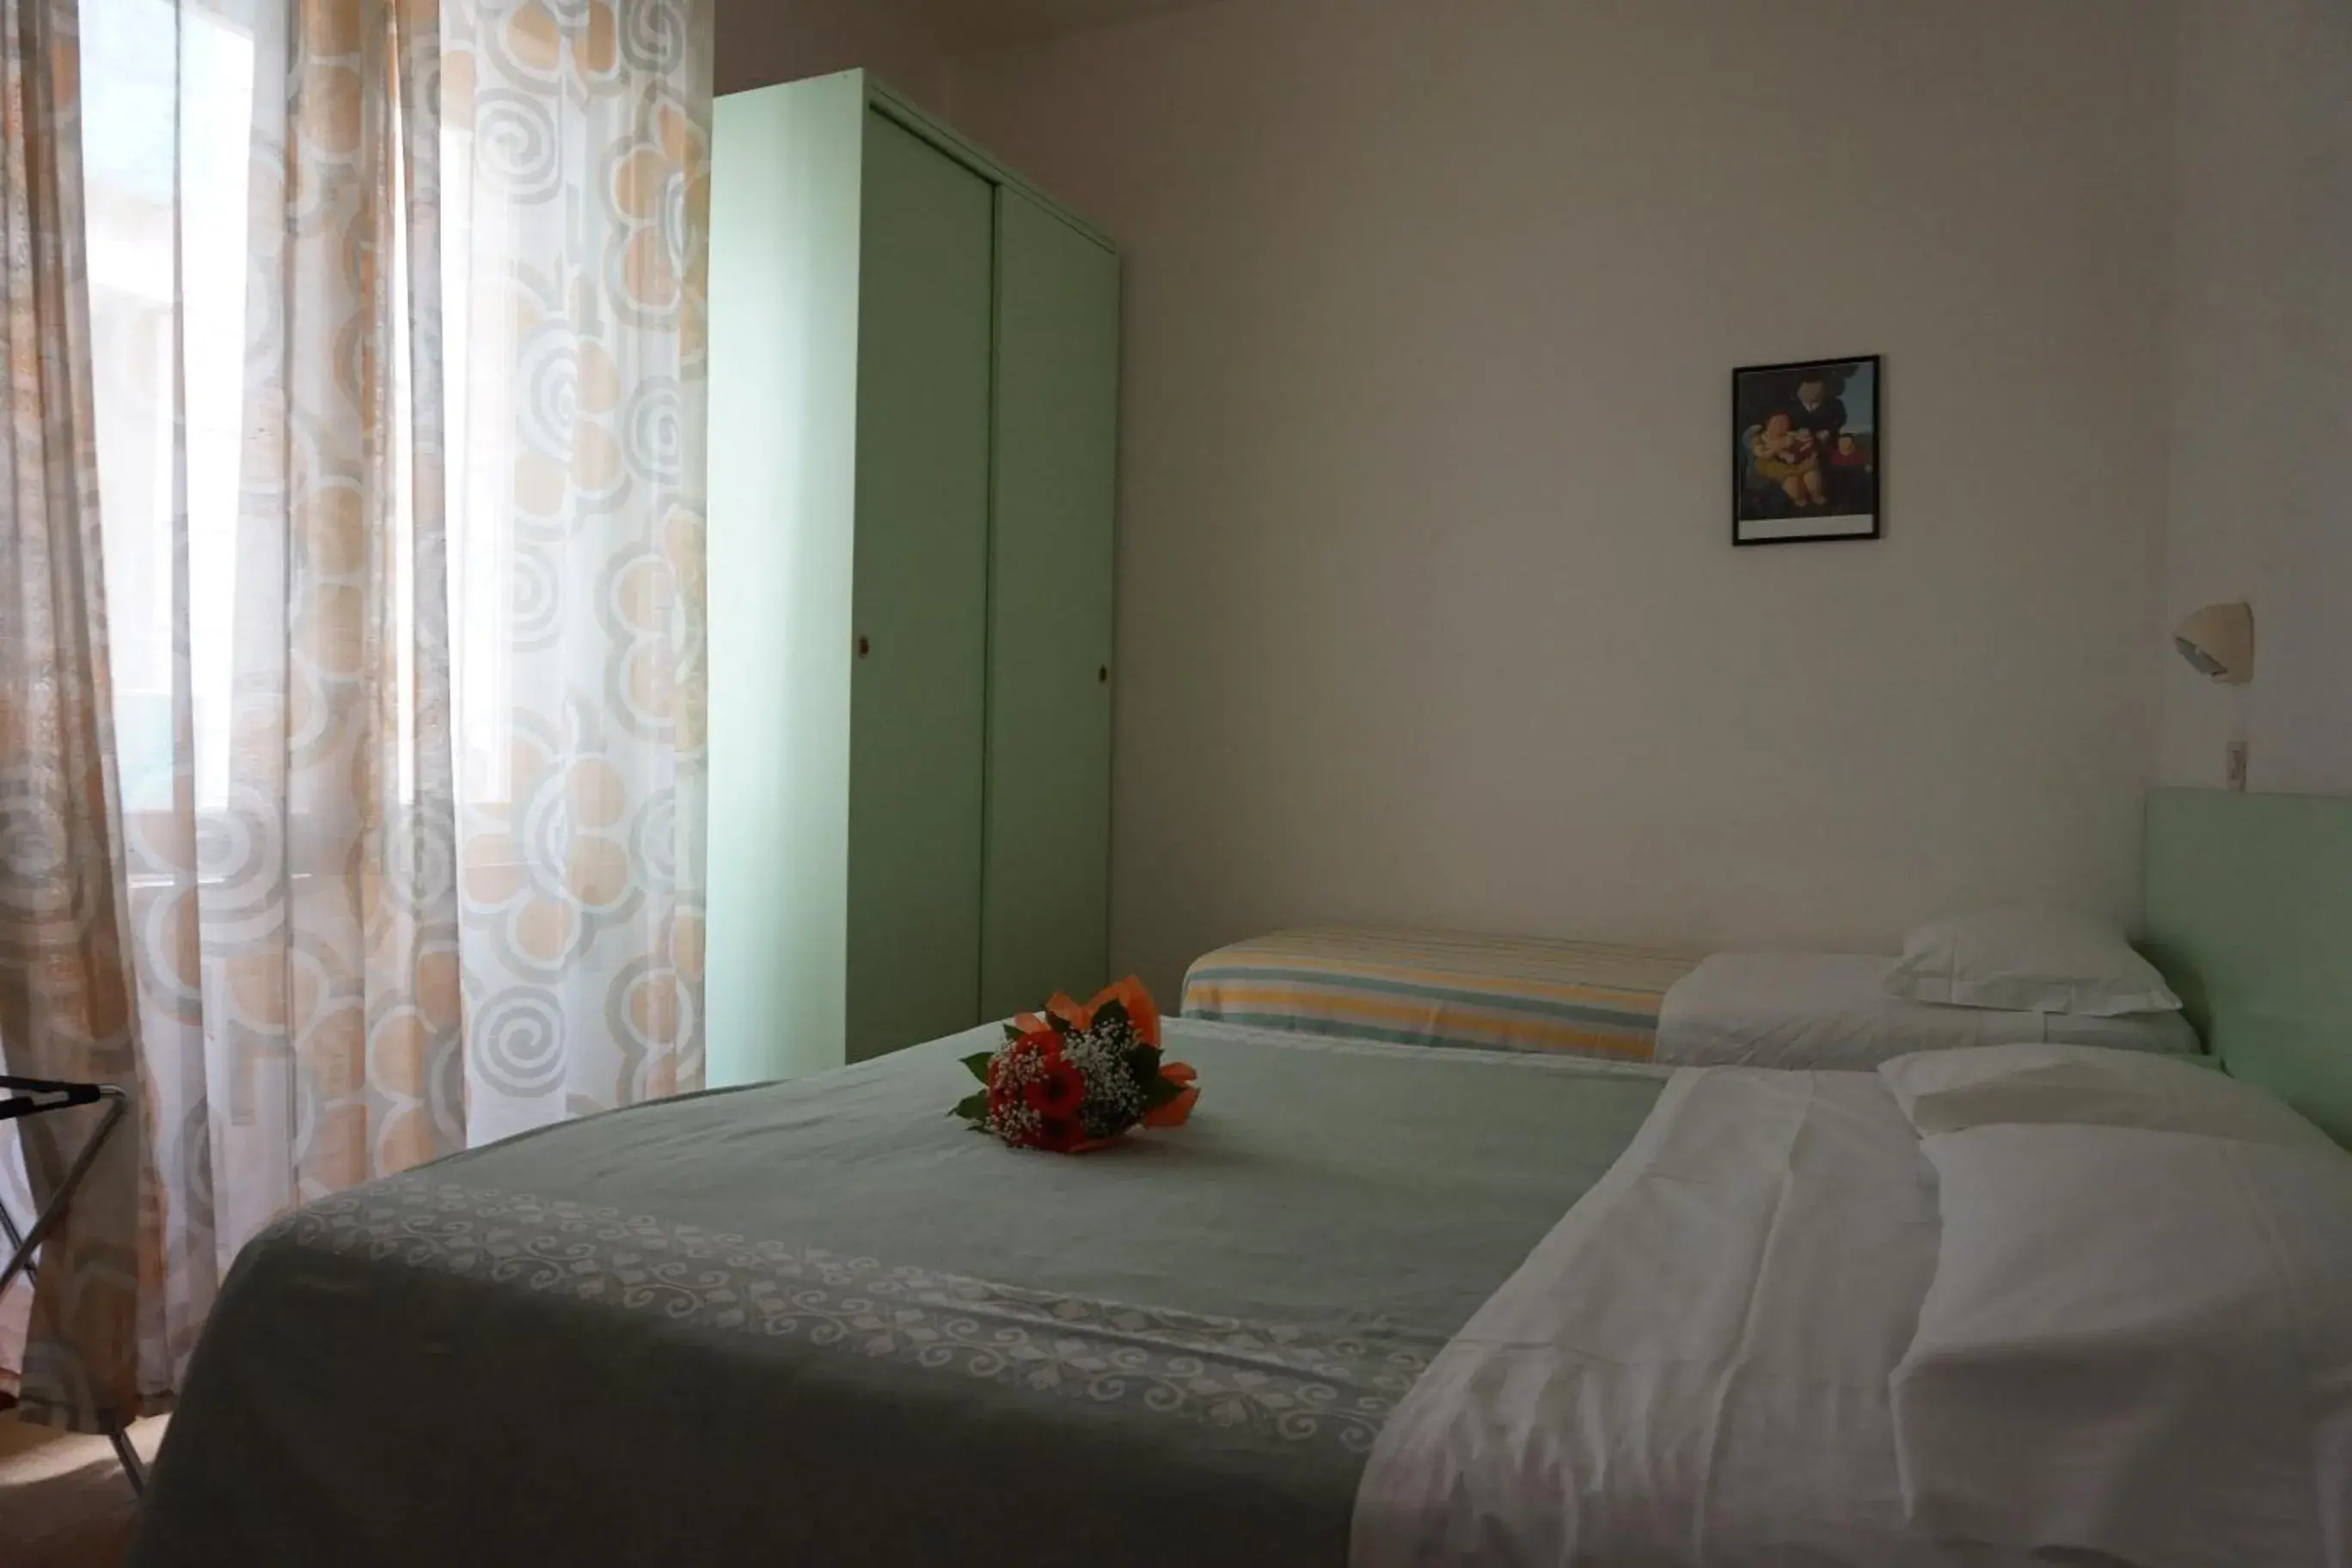 Bed, Room Photo in Hotel Aurora